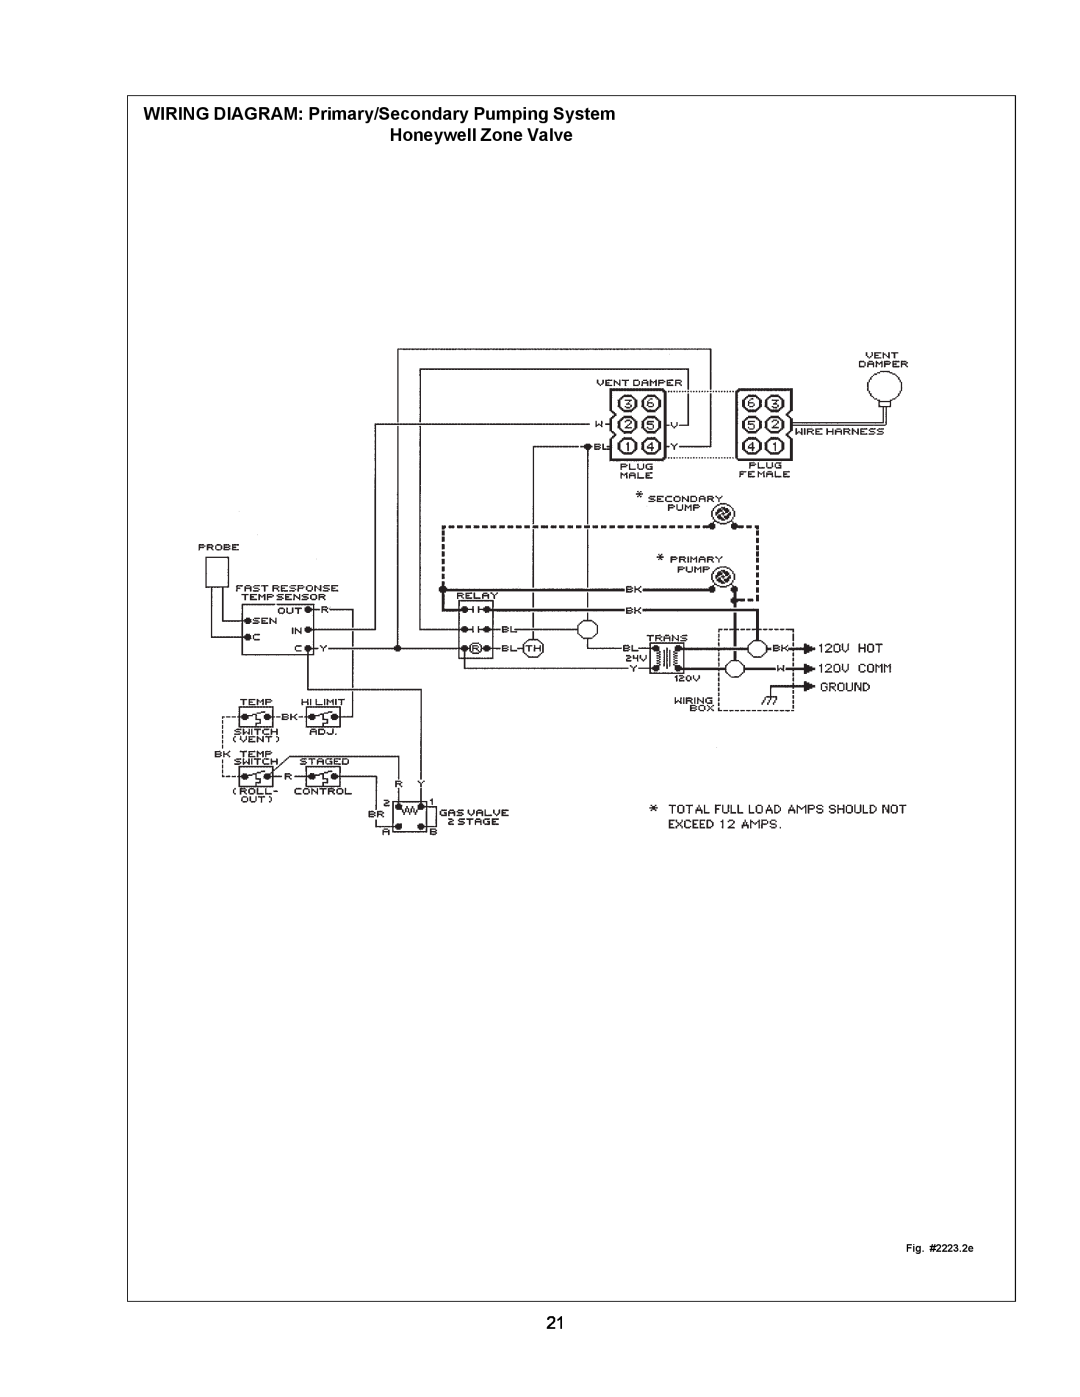 Raypak 0066B, 0180B, 0042B manual WIRING DIAGRAM Primary/Secondary Pumping System, Honeywell Zone Valve, Fig. #2223.2e 